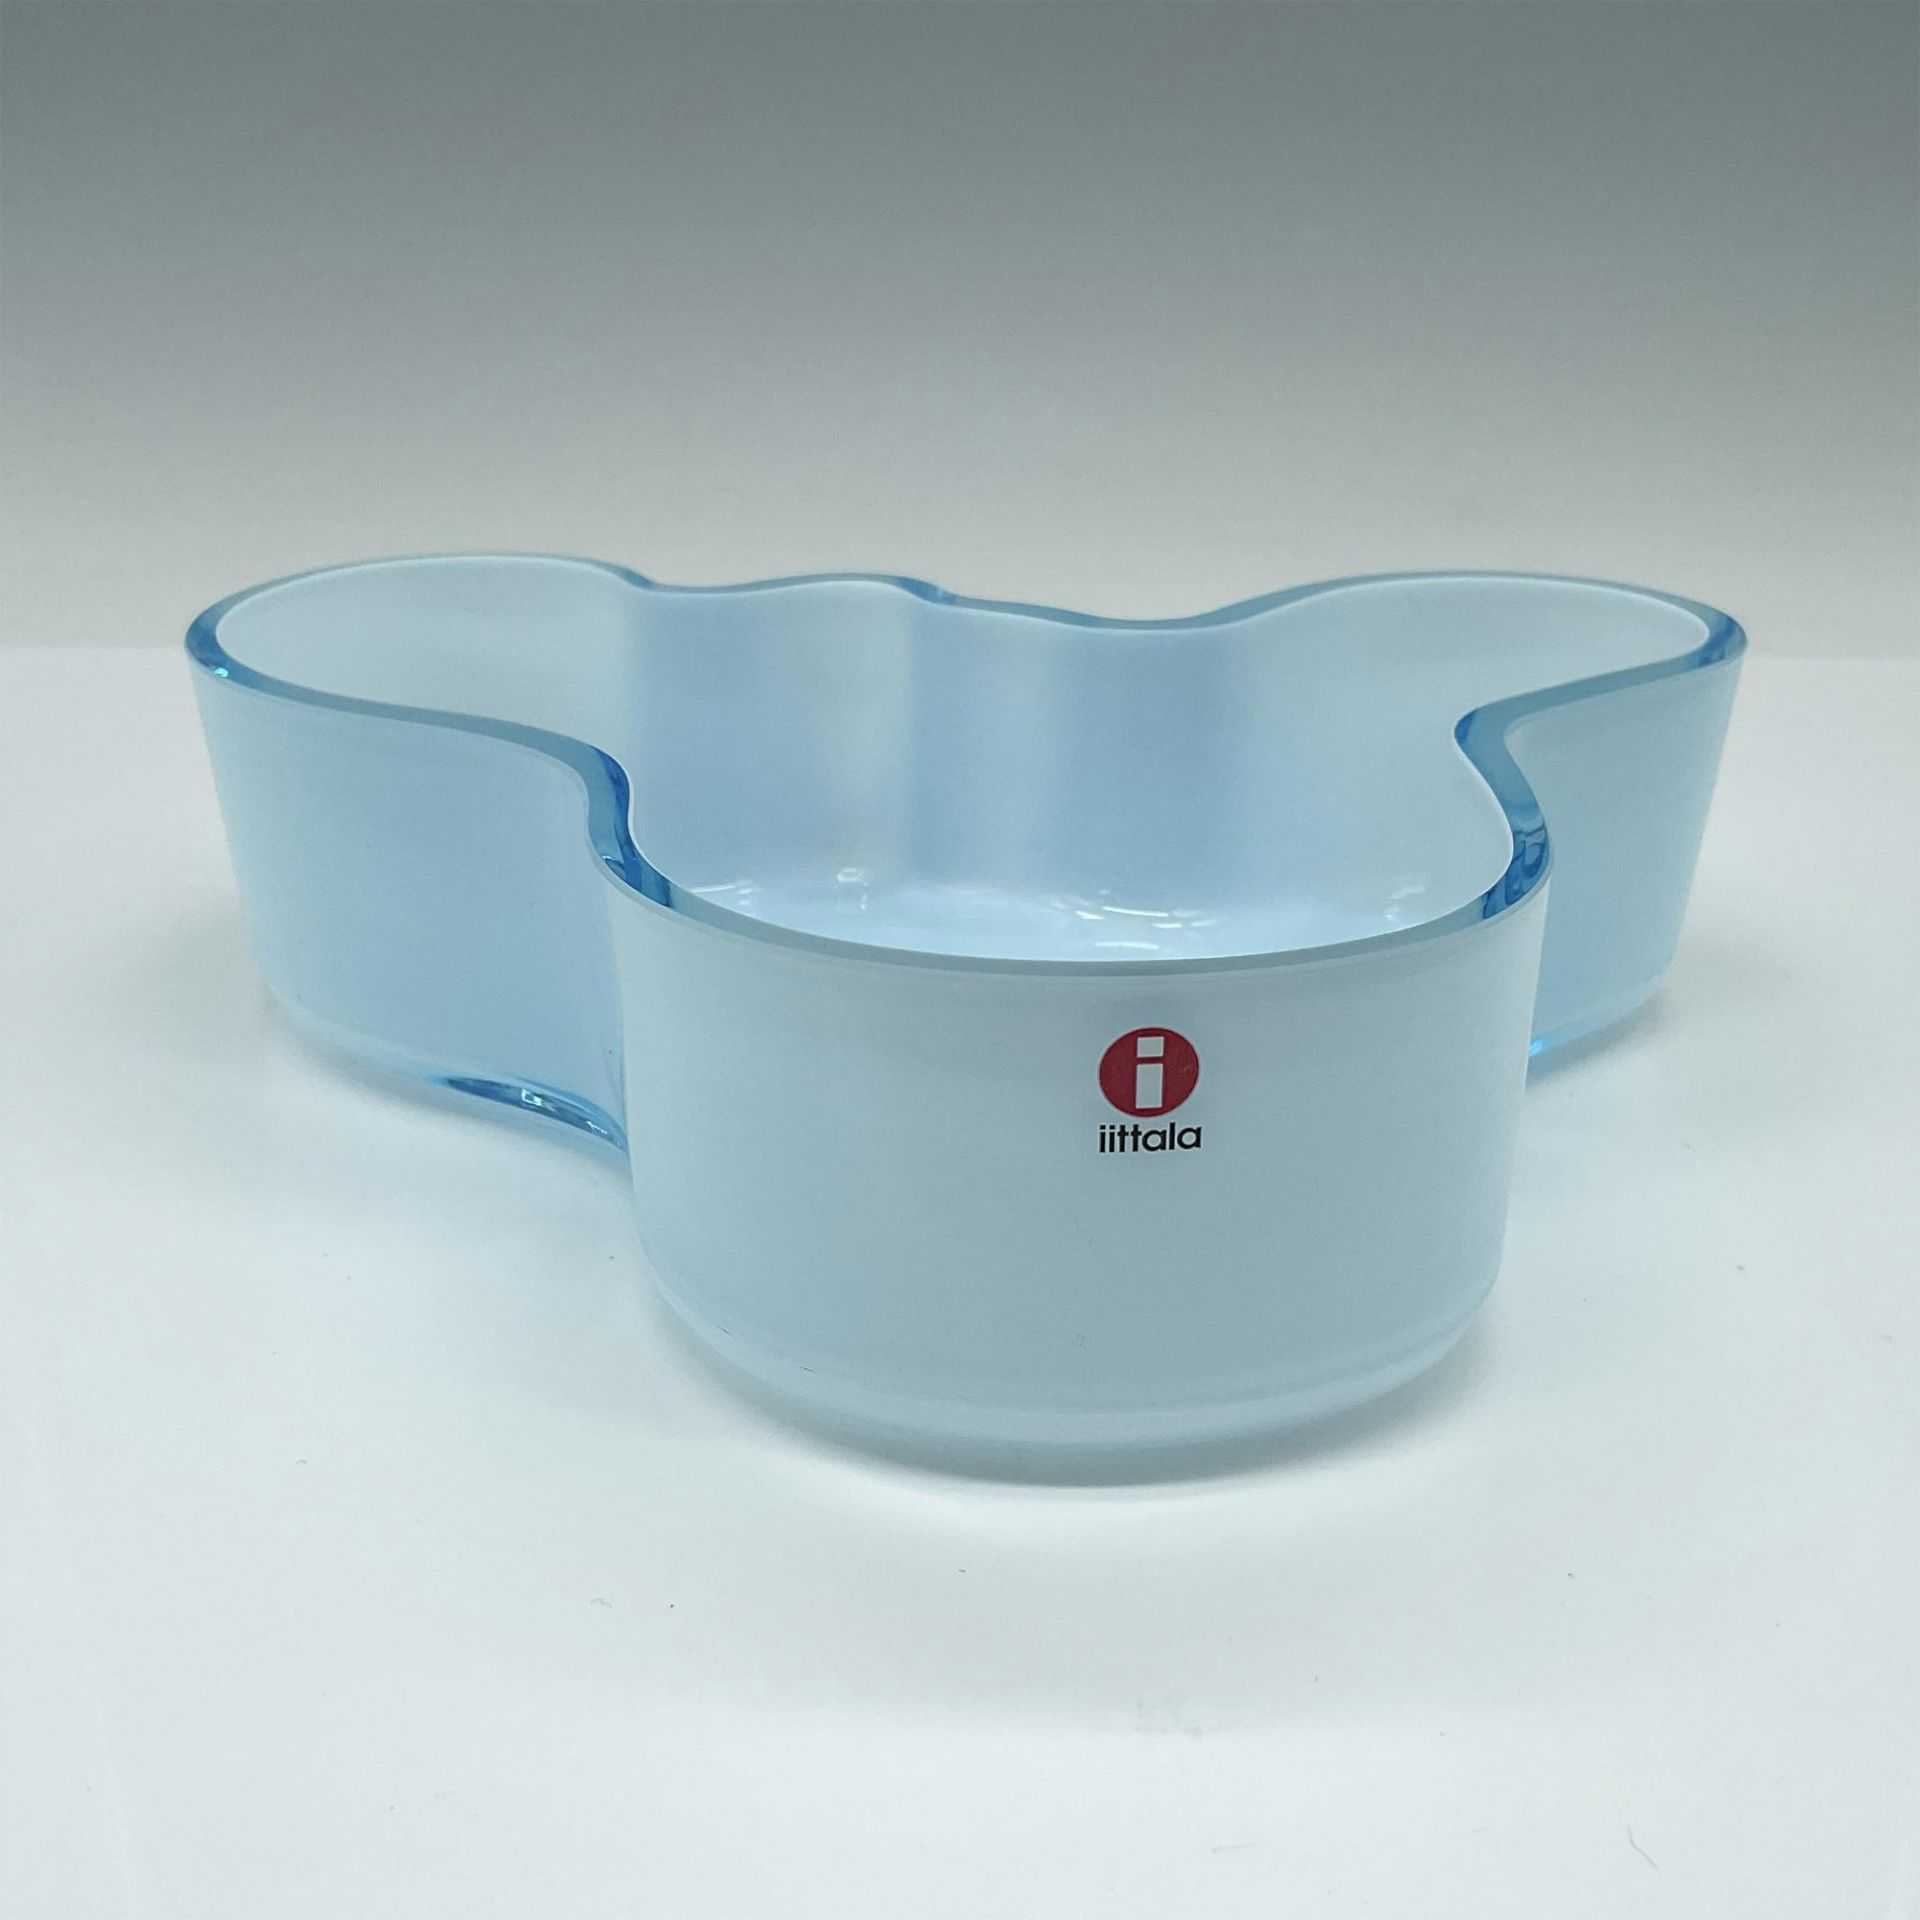 Iittala Blue and White Glass Bowl, Alvar Aalto Collection - Bild 2 aus 4